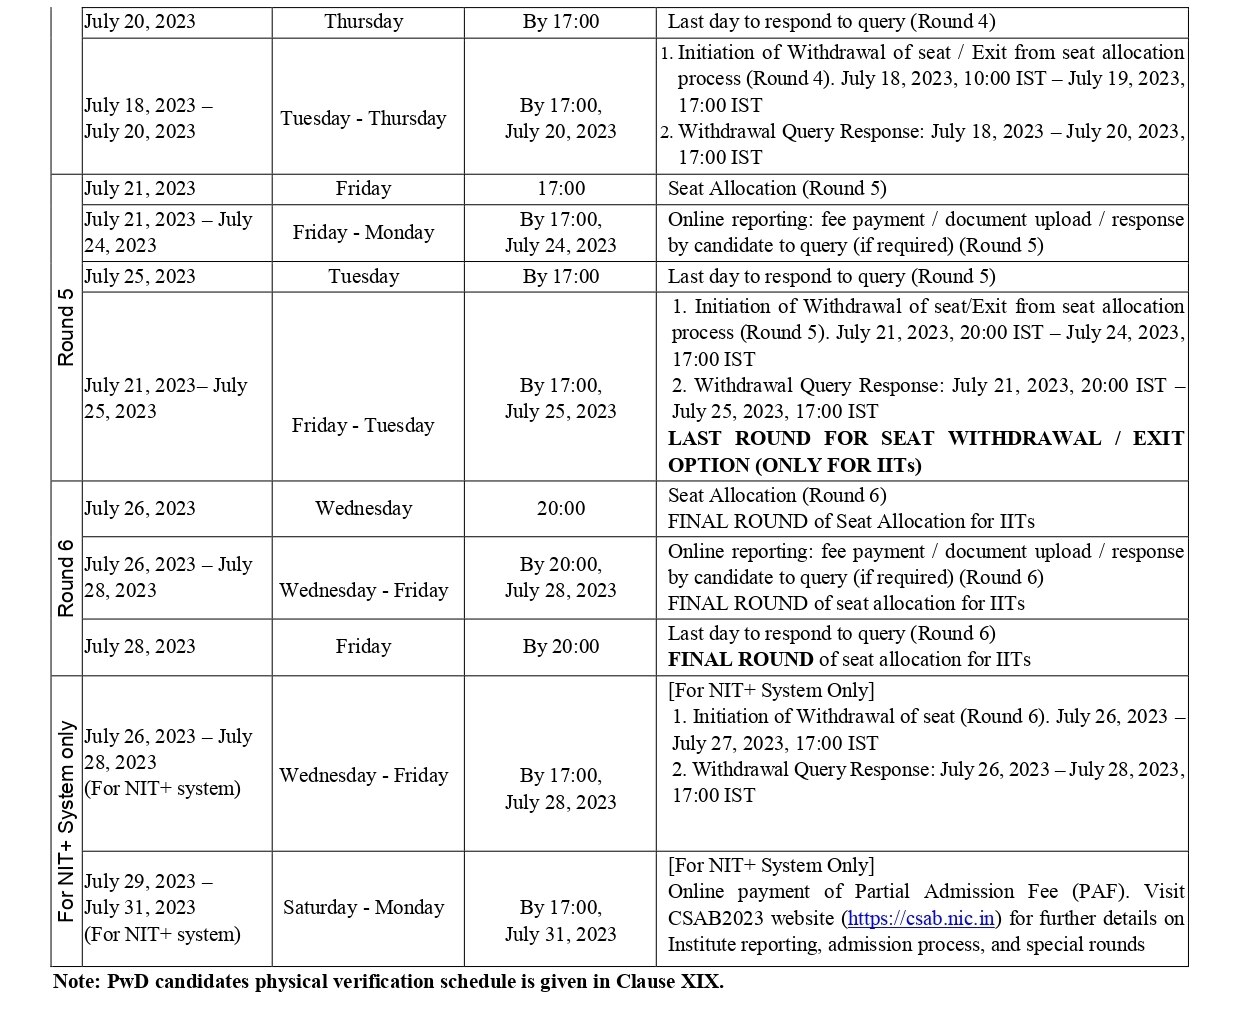 JoSAA 2023 Schedule: 'జోసా' కౌన్సెలింగ్ షెడ్యూలు వచ్చేసింది, ముఖ్యమైన తేదీలివే!